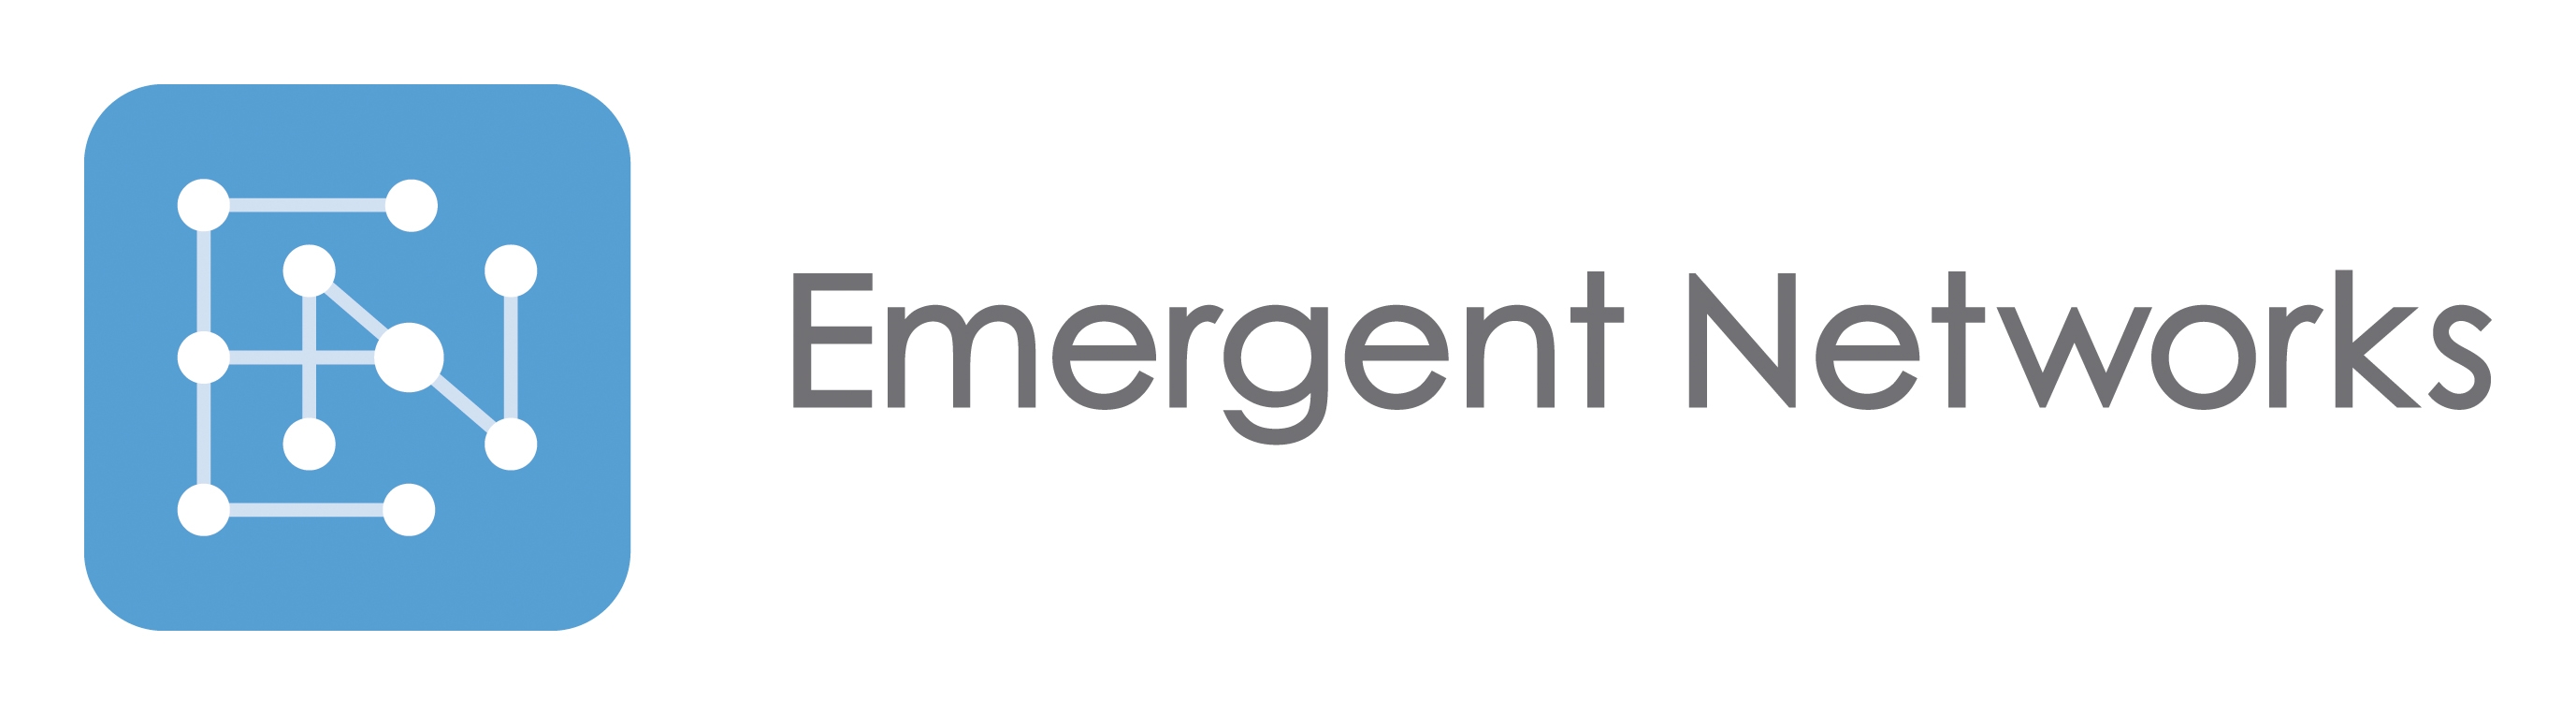 Emergent Networks Company Logo